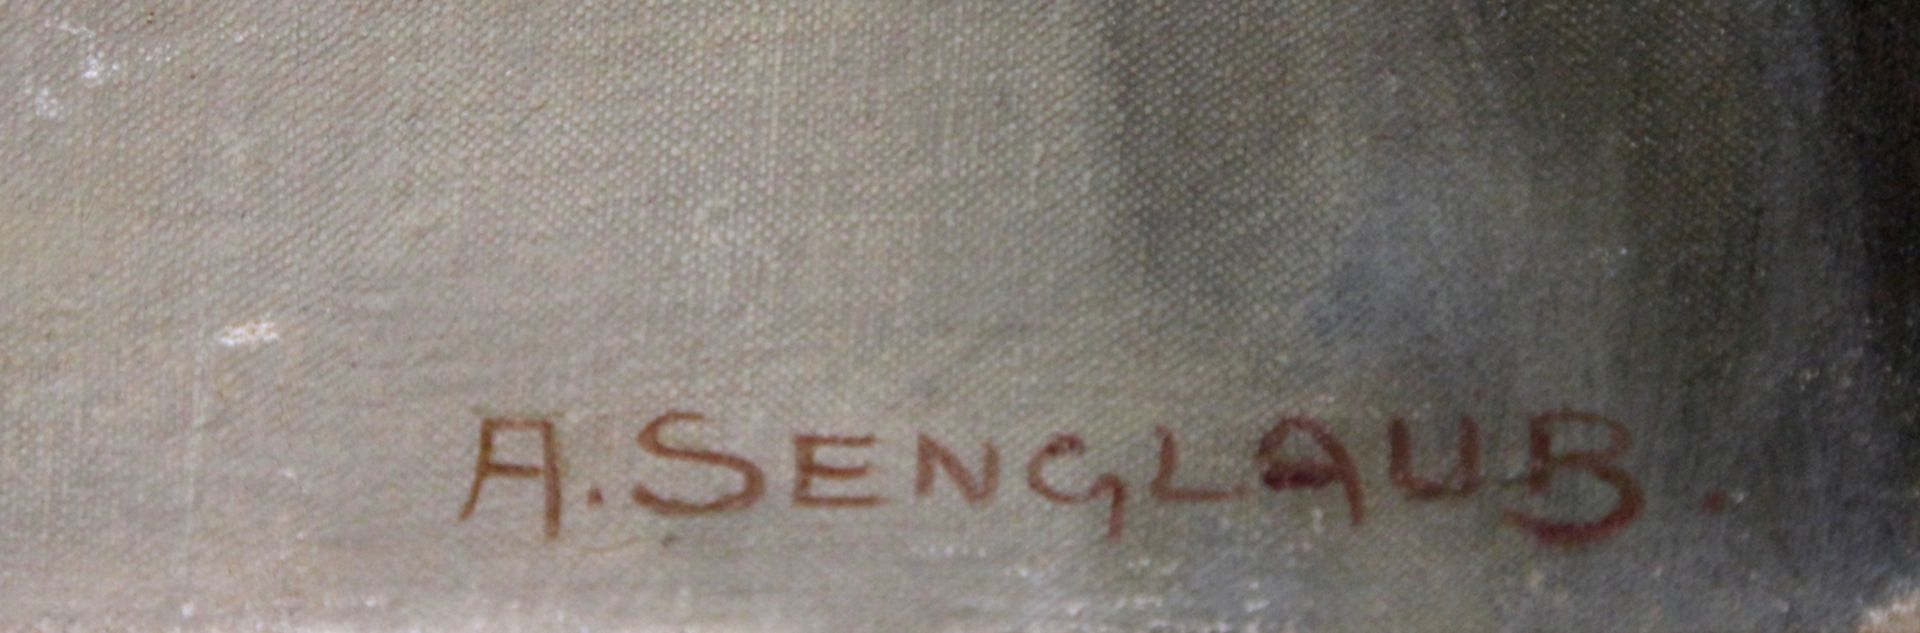 Senglaub, Adolf - Image 2 of 3